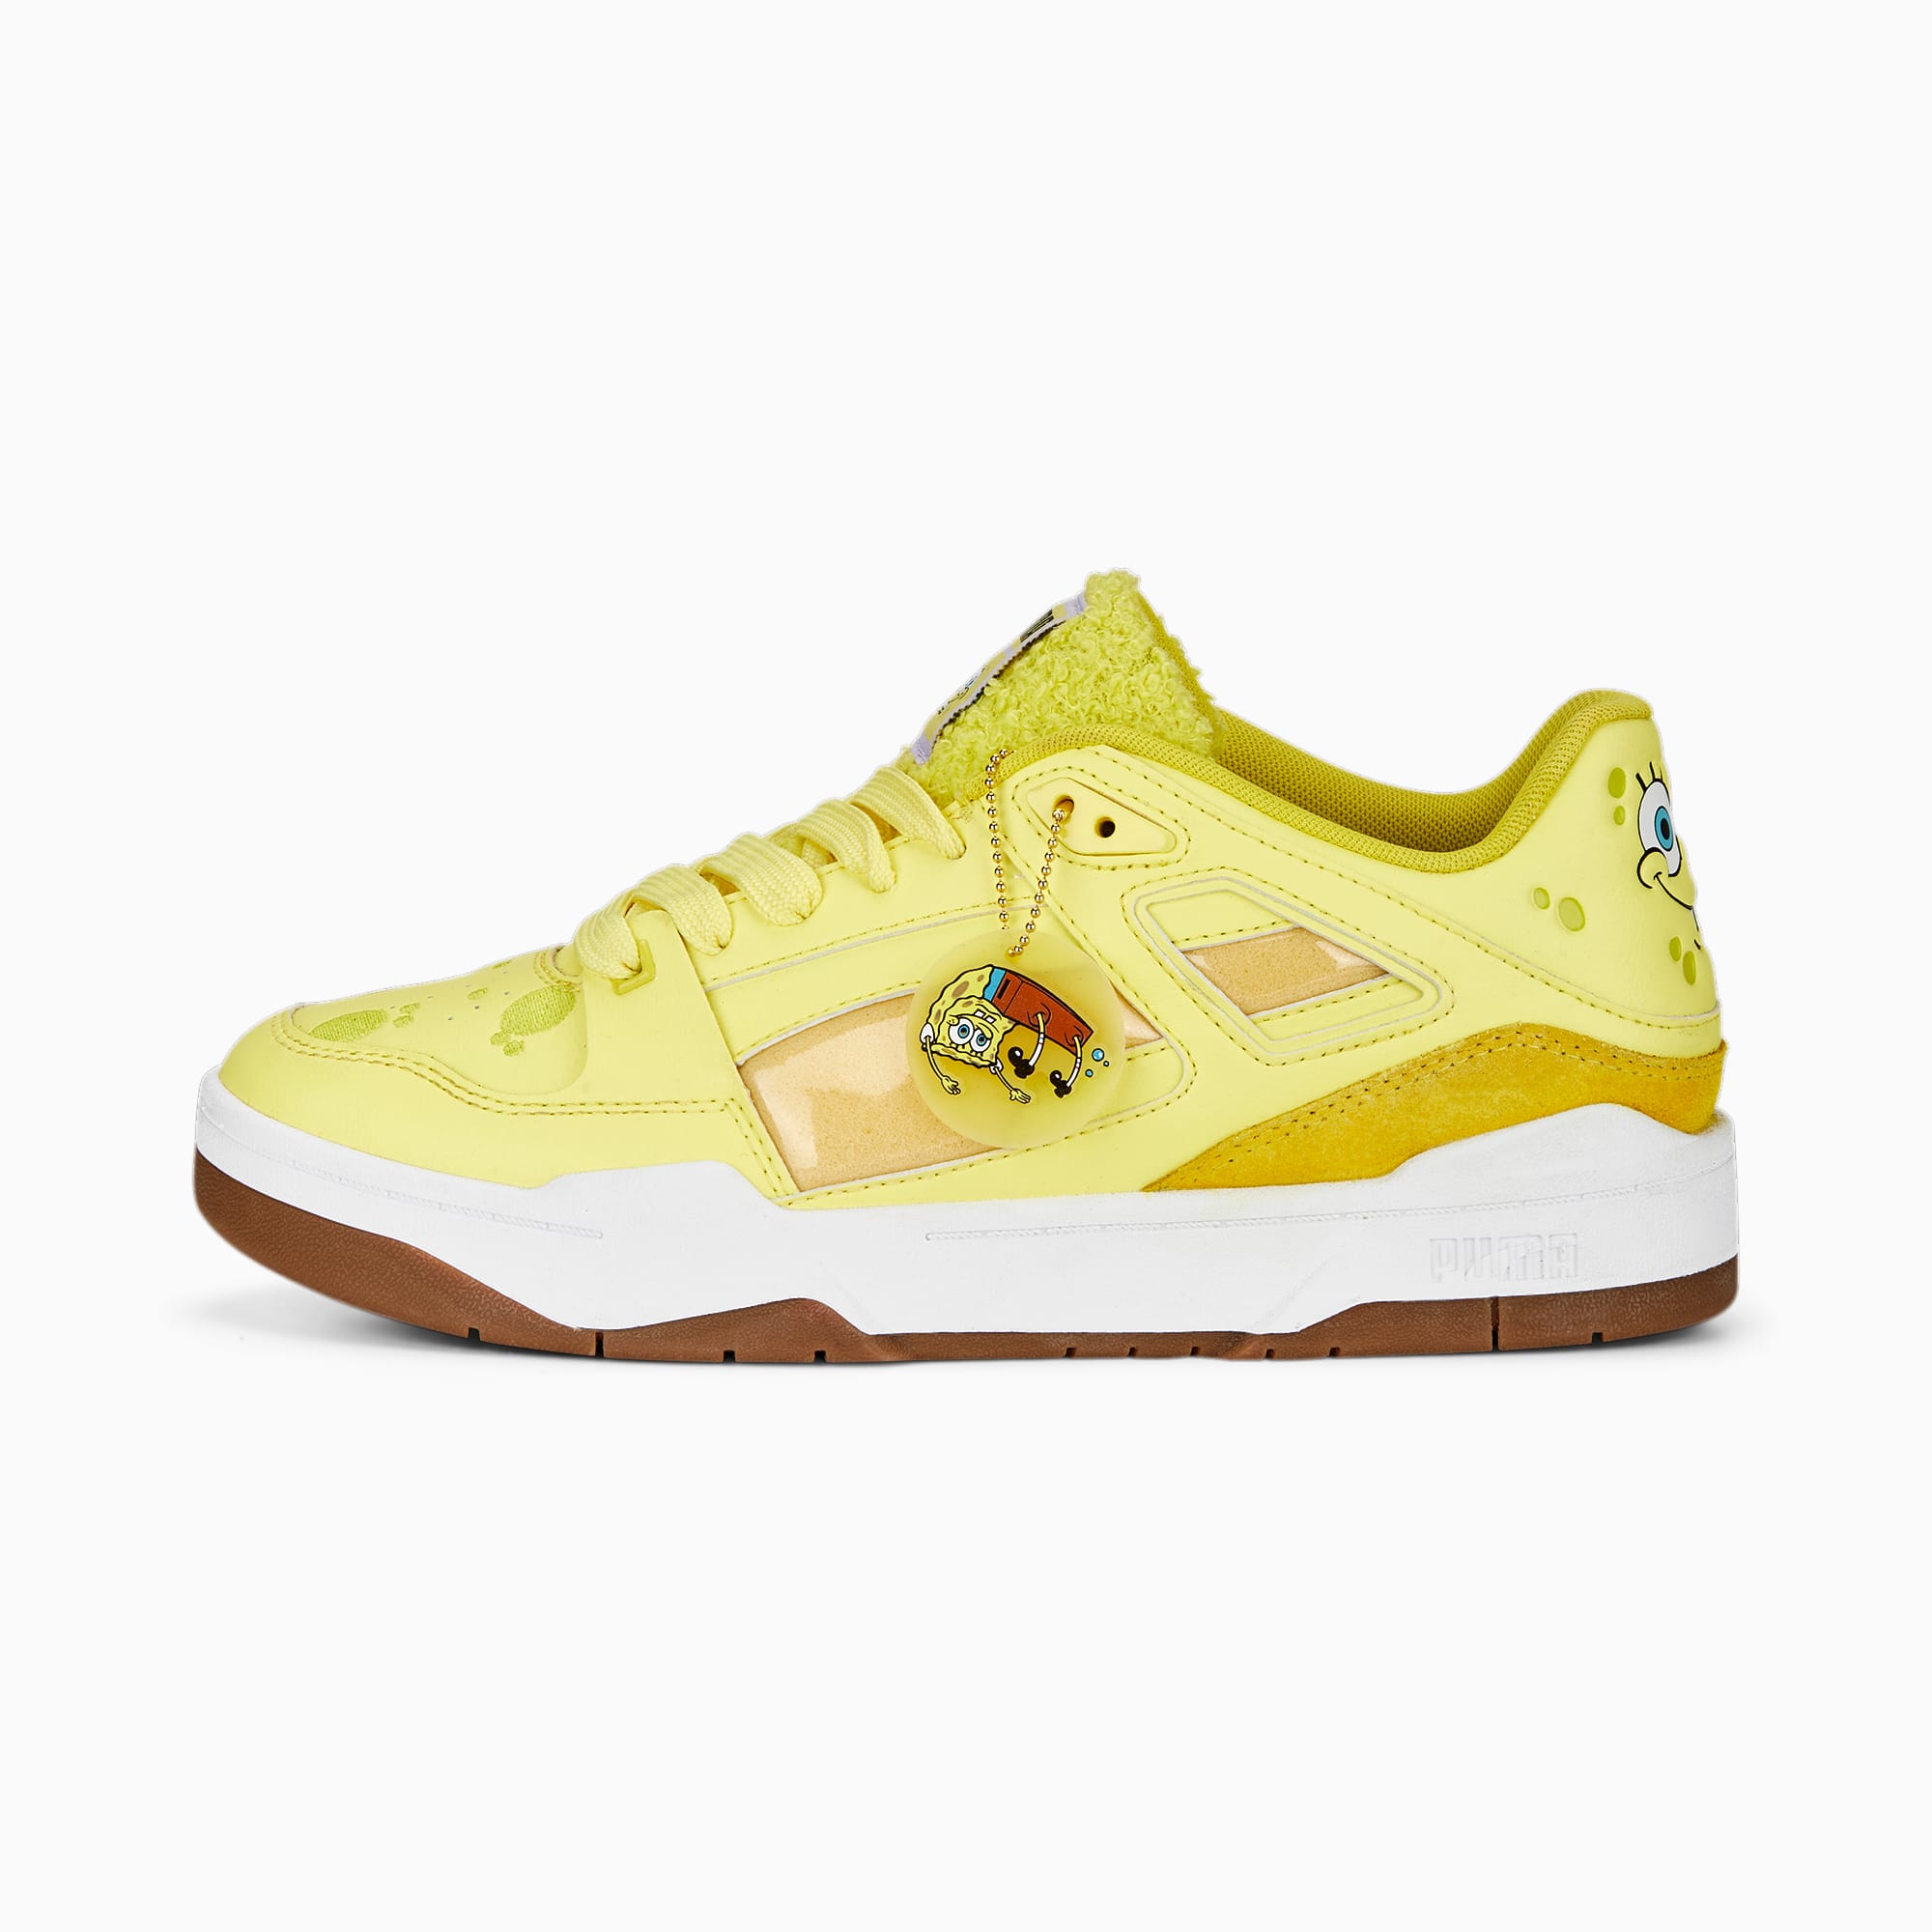 x SPONGEBOB Slipstream Sneakers Lucent Yellow-Citronelle PUMA Shopback x PUMA | PUMA